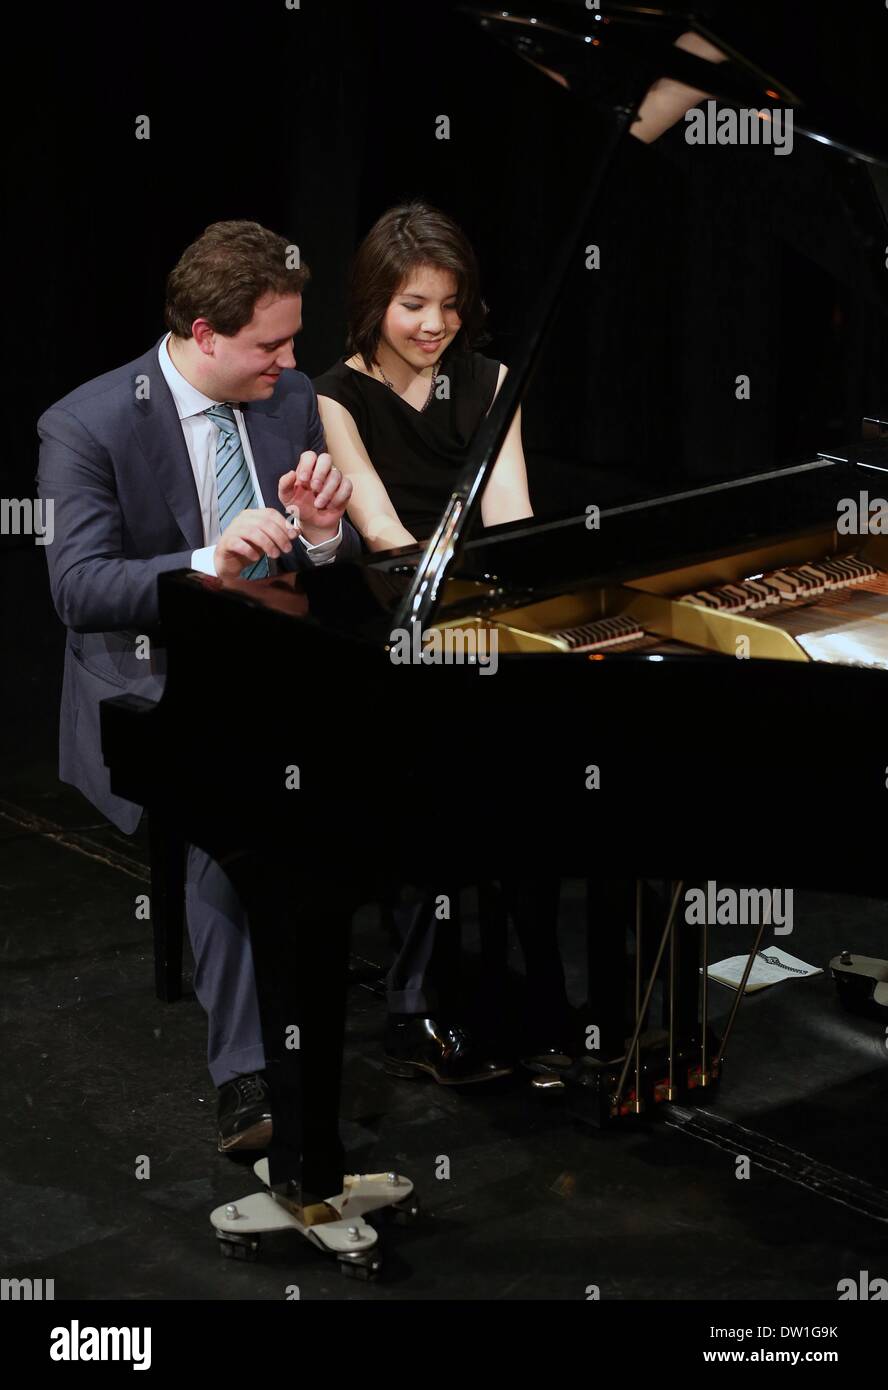 140226) -- FRANKFURT, Feb. 26, 2014 (Xinhua) -- The four-hand jazz piano duo  Italian pianist Paolo Alderighi (L) and U.S. pianist Stephanie Trick  perform at the International Theater in Frankfurt, Germany, on